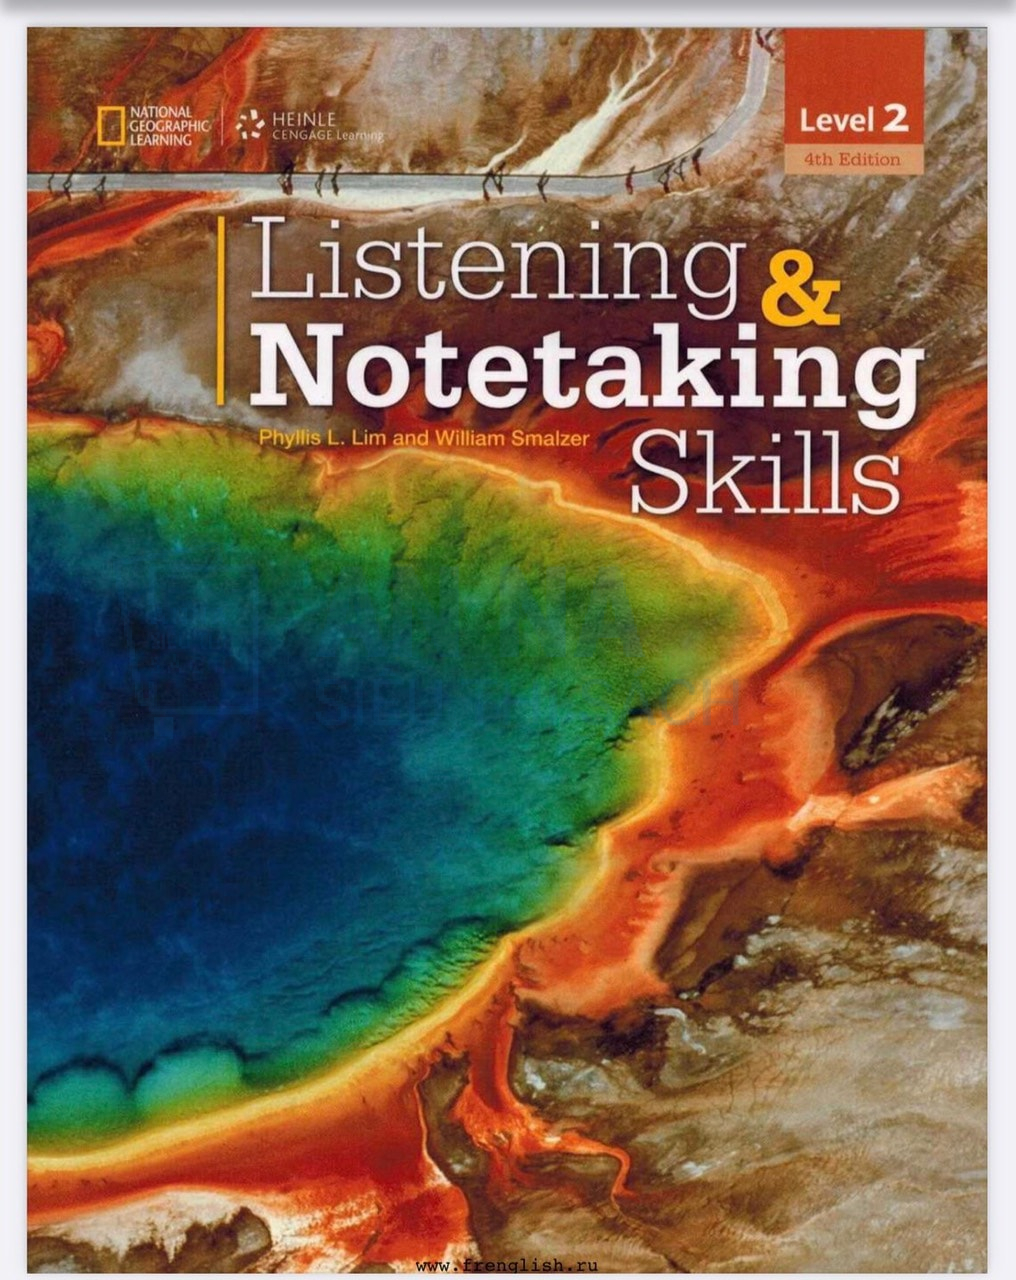 Listening and Notetaking Skills 4rd Edition